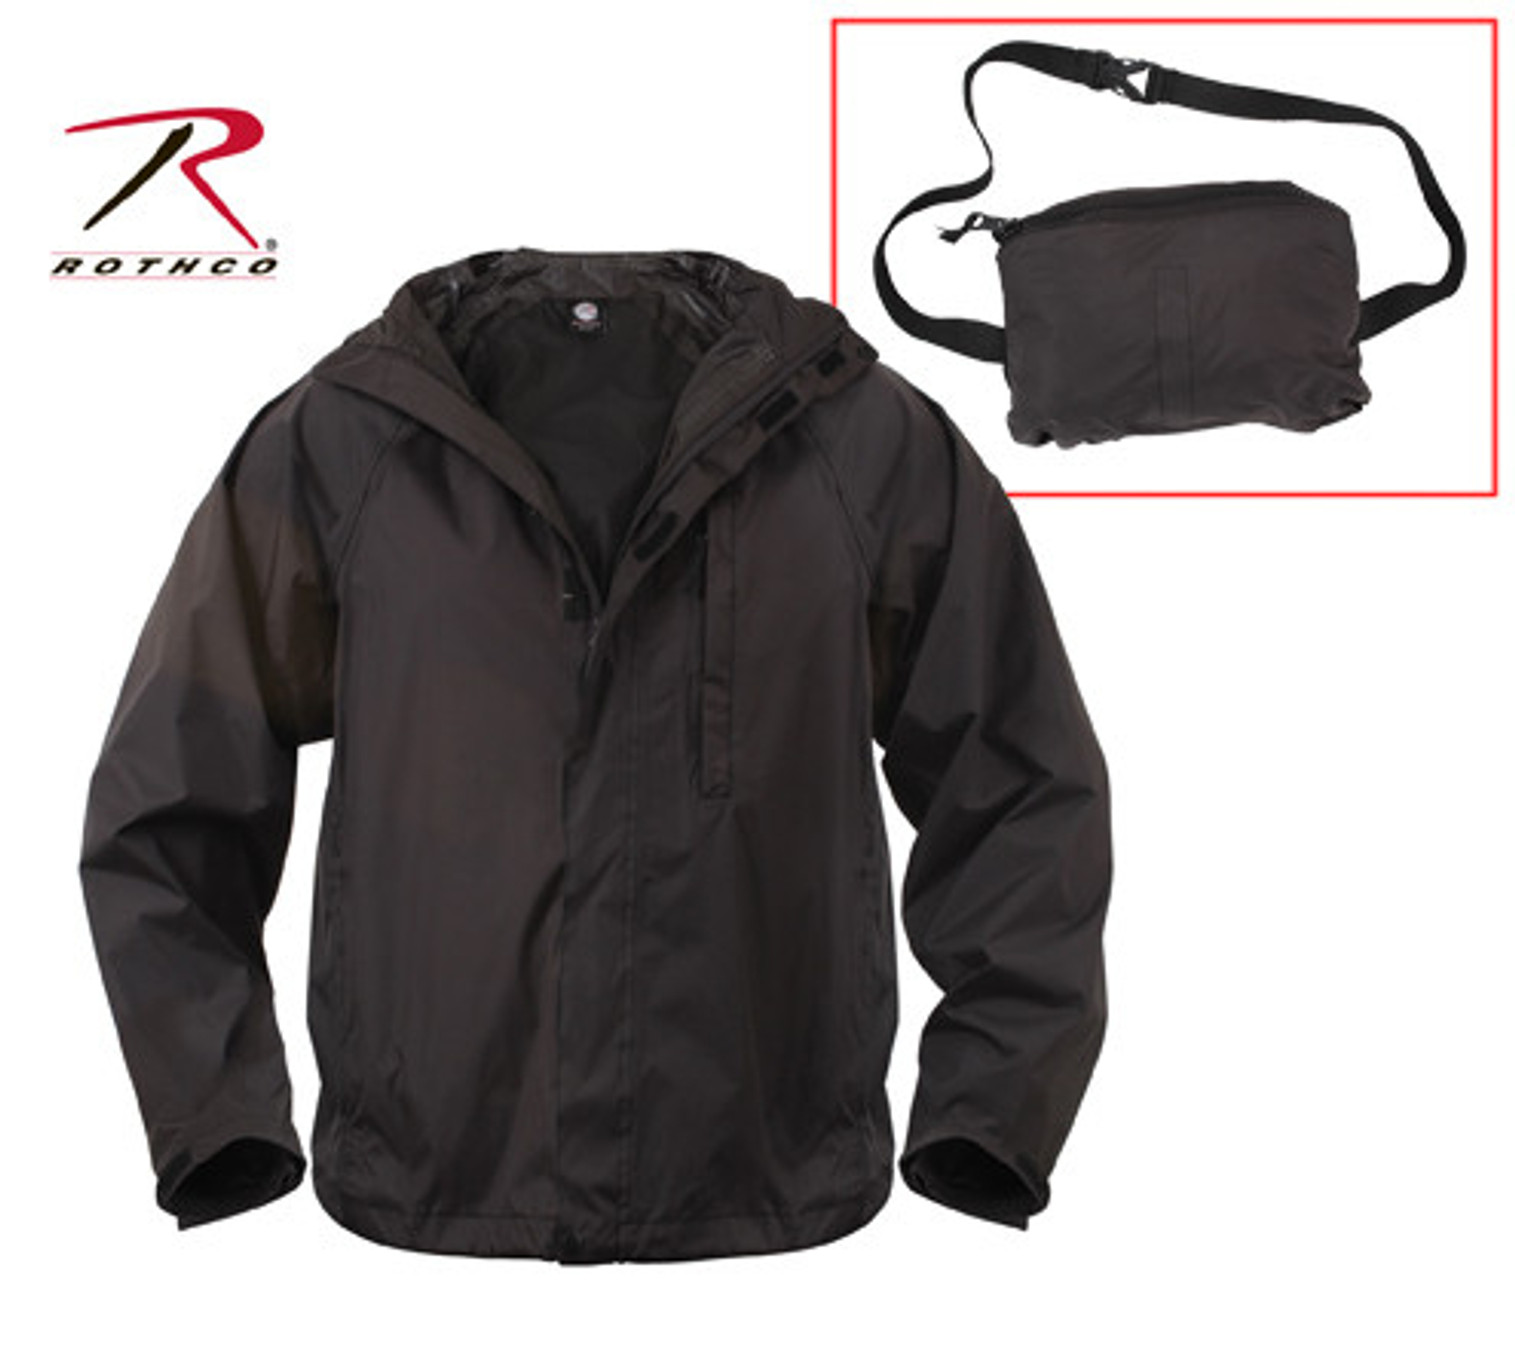 Rothco Packable Rain Jacket - Black